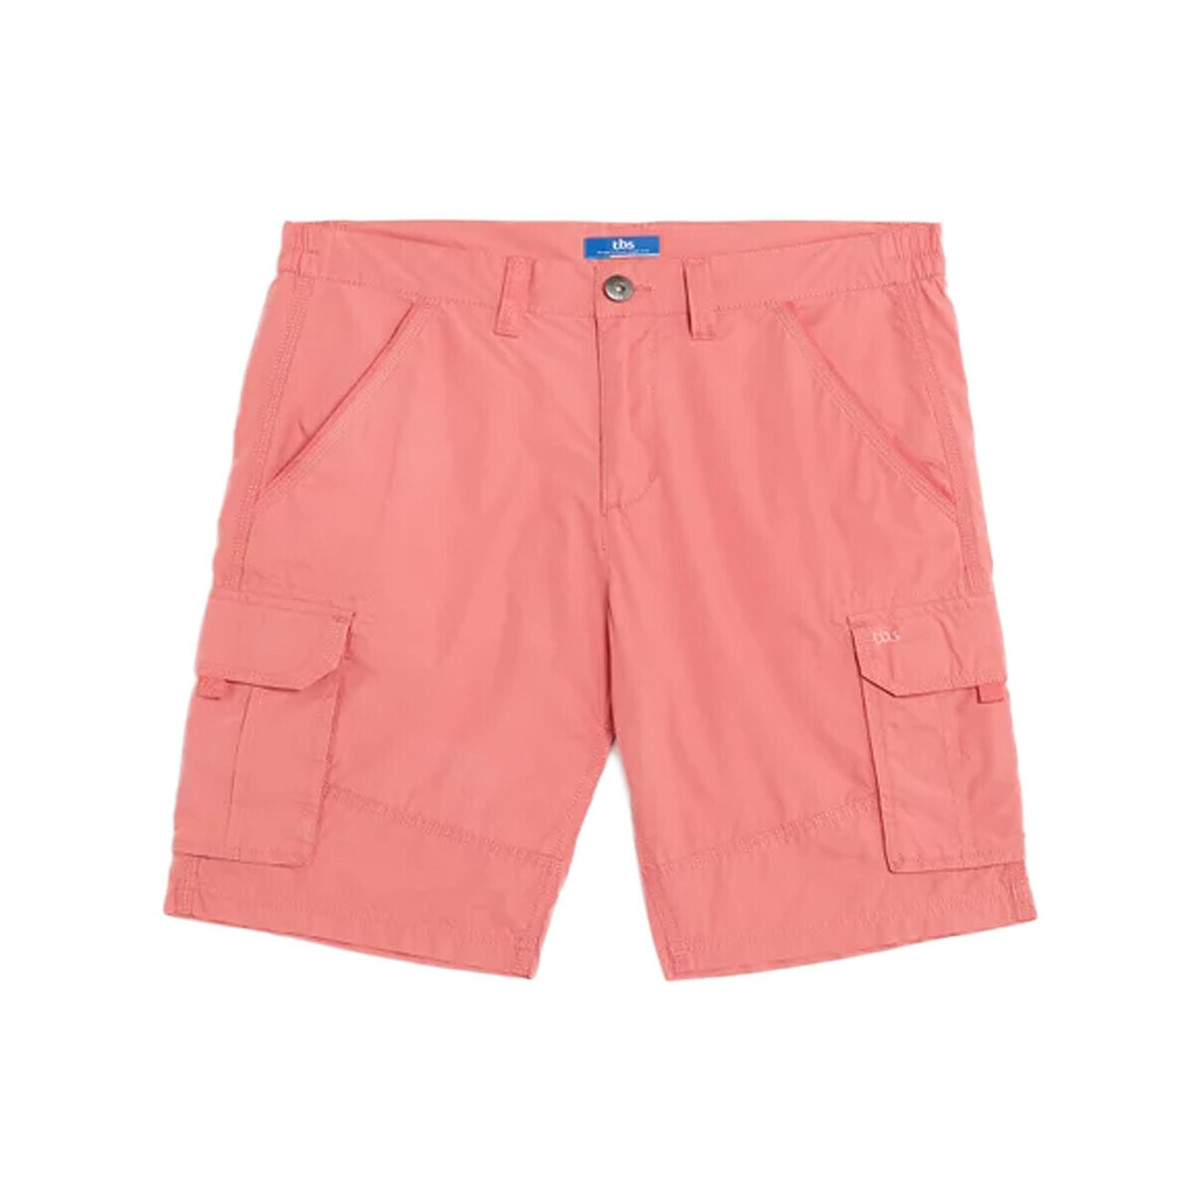 Textil Homem Shorts / Bermudas TBS  Rosa